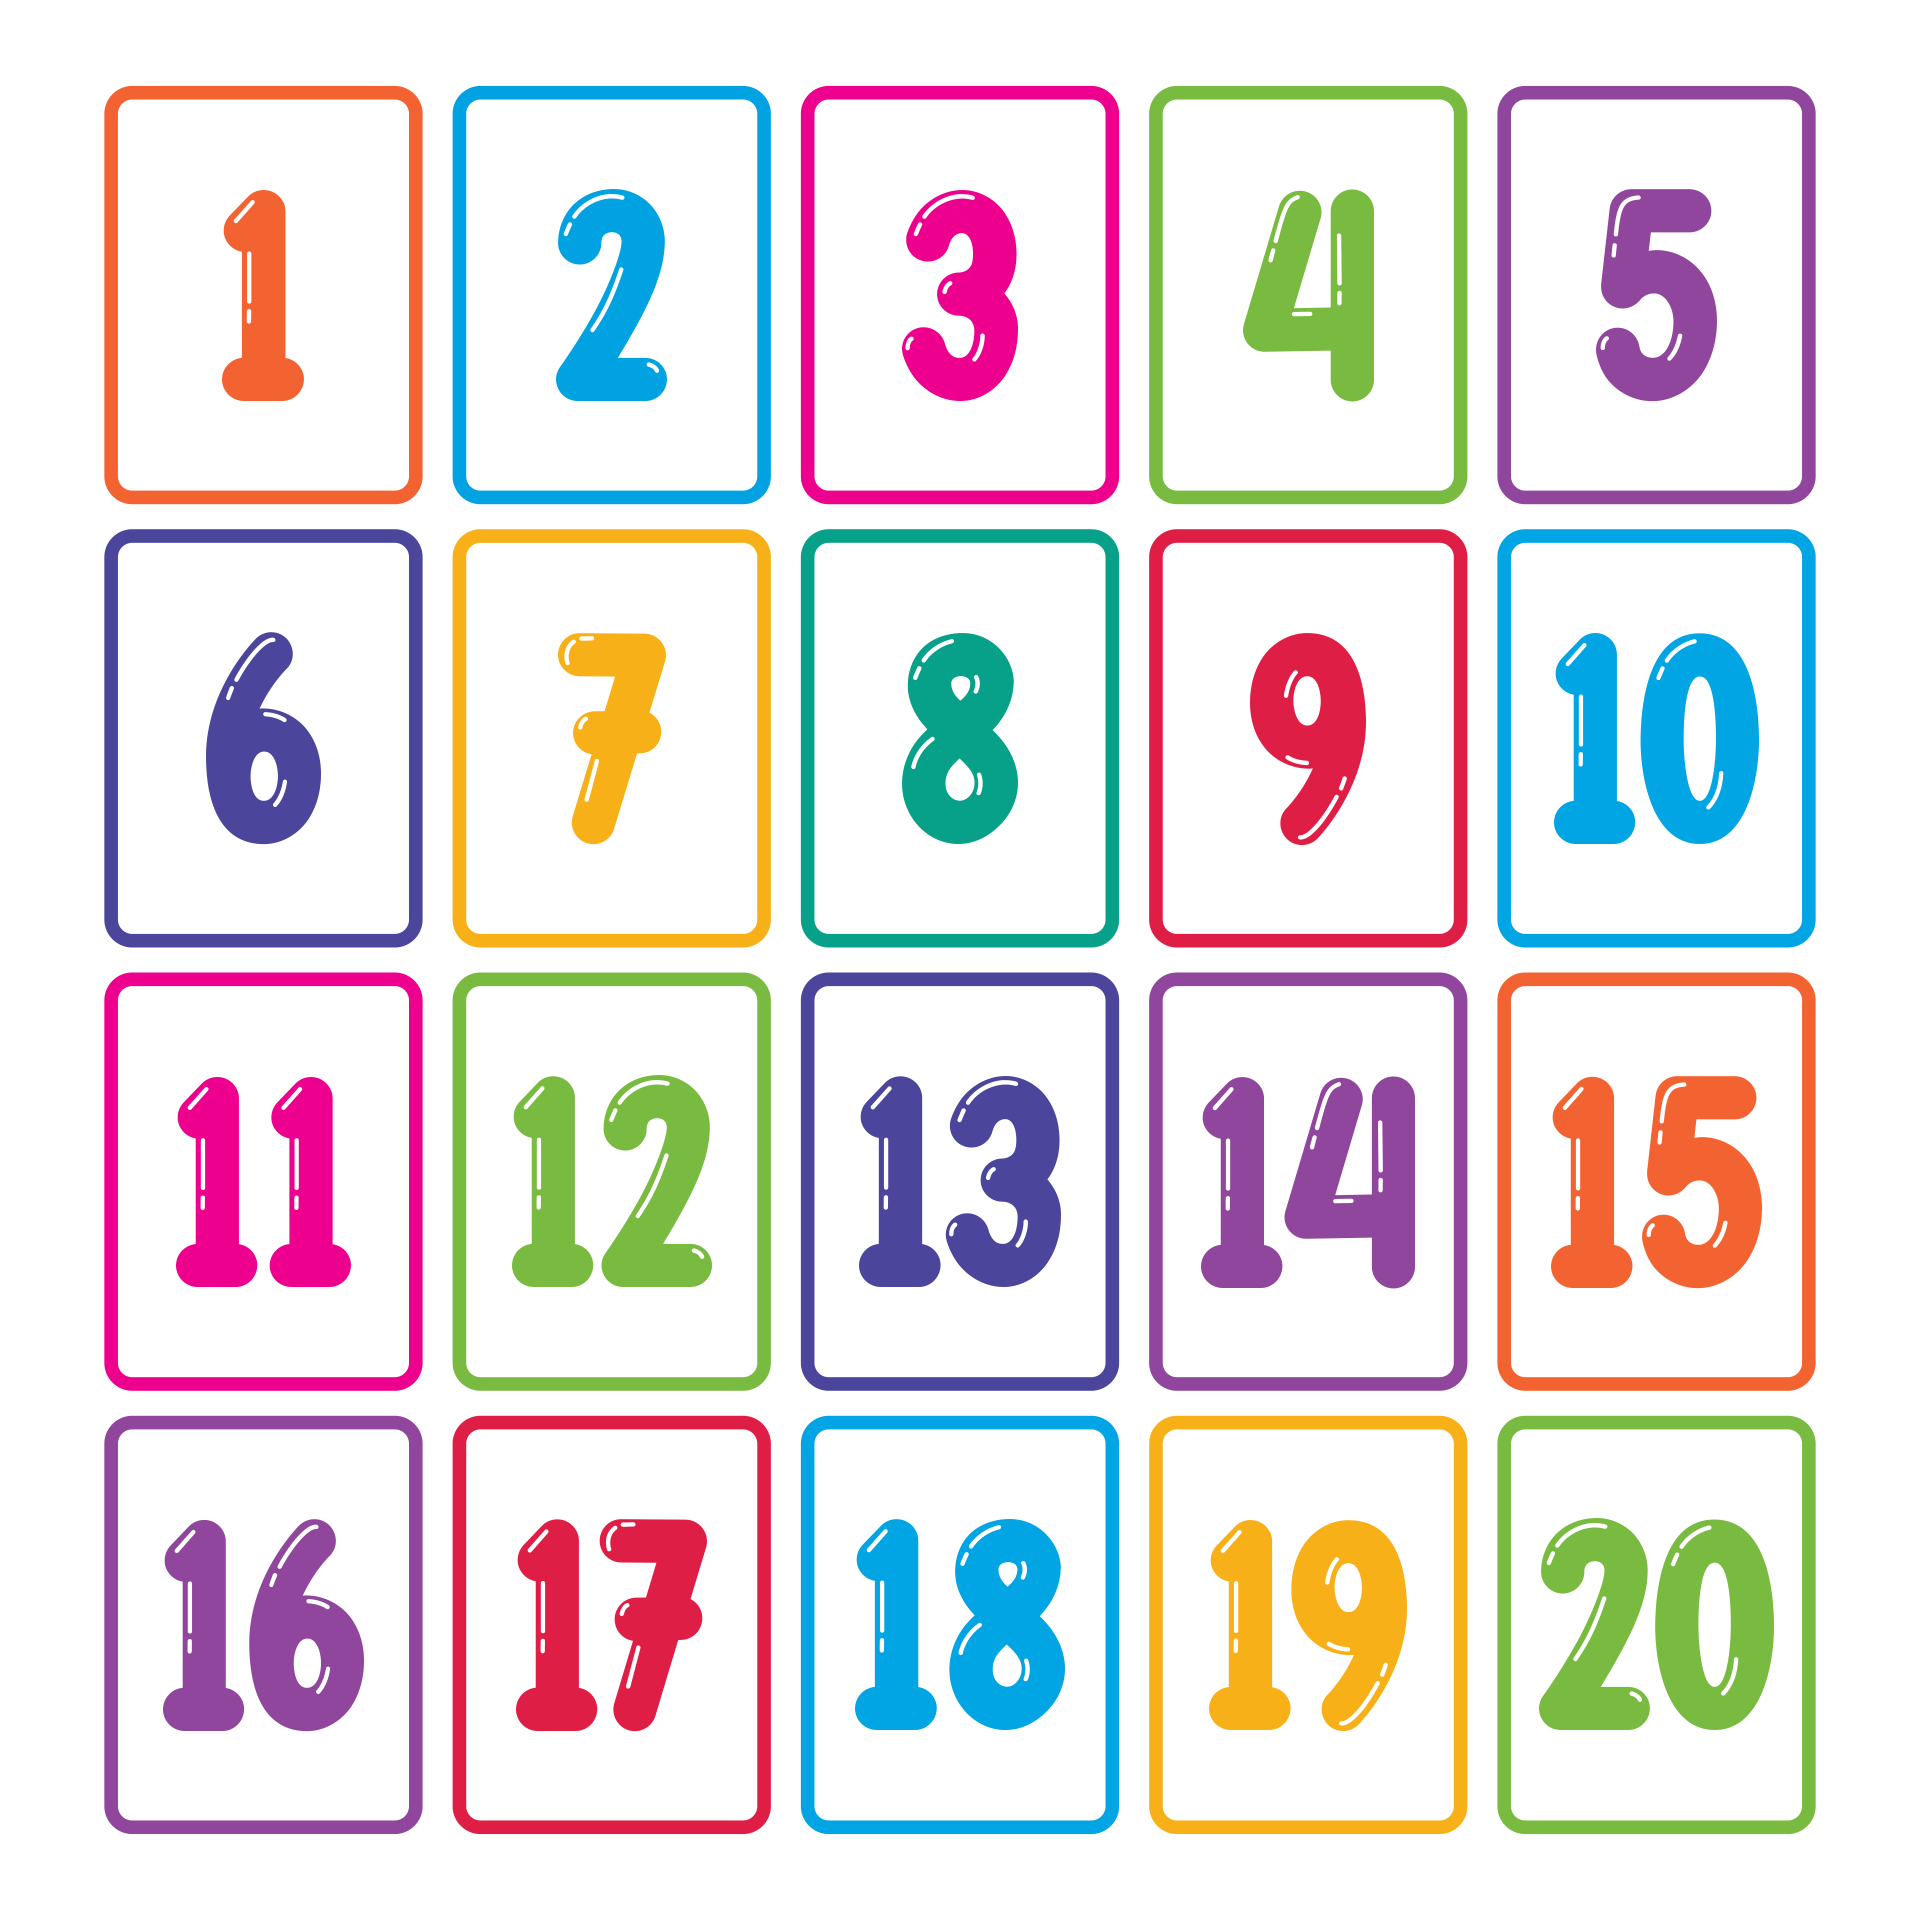 9 Best Images of Printable Number Cards - Printable Number Flash Card 1 ...